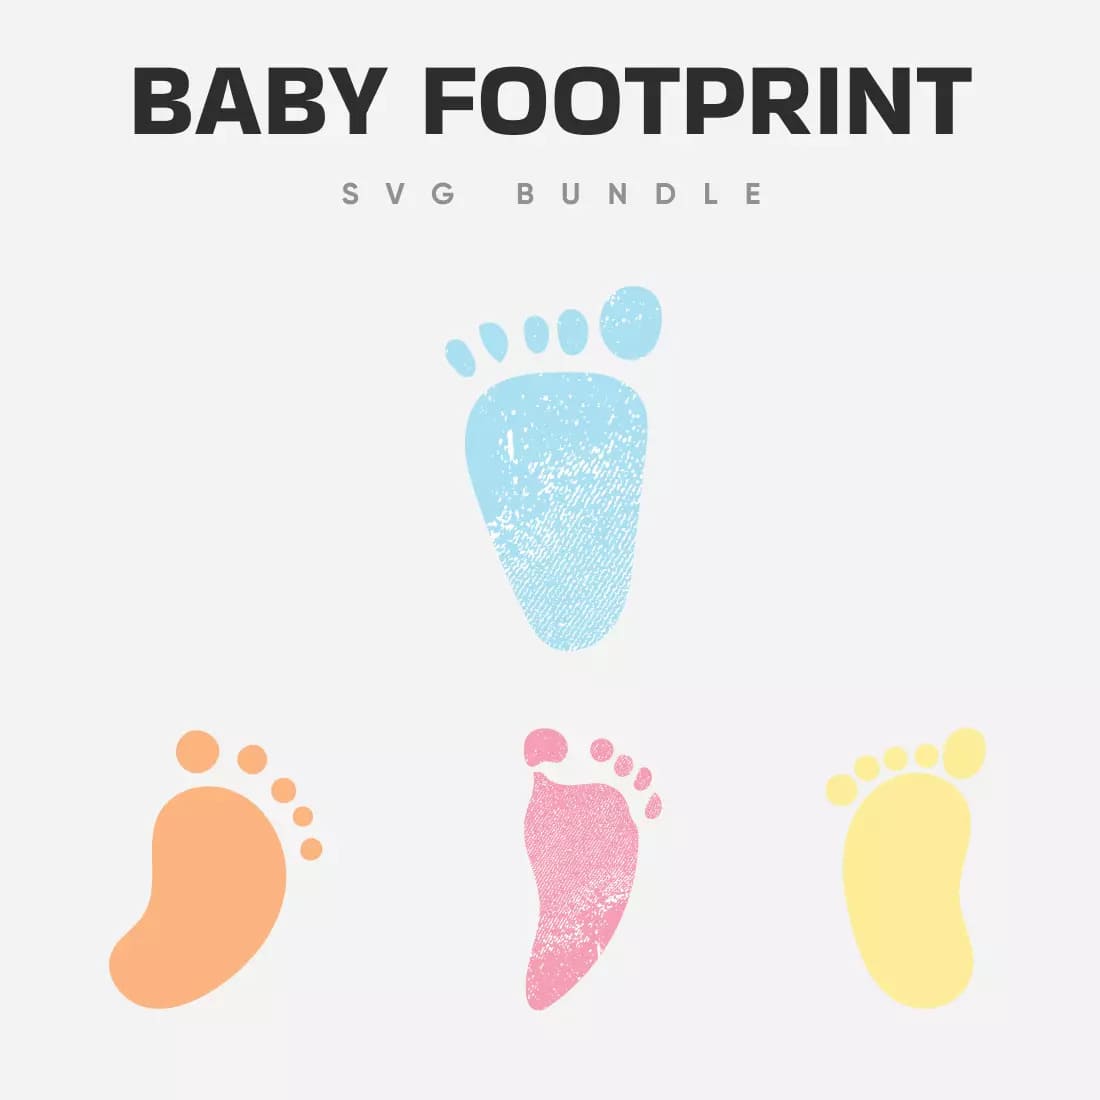 Baby Footprint SVG Bundle Preview 7.